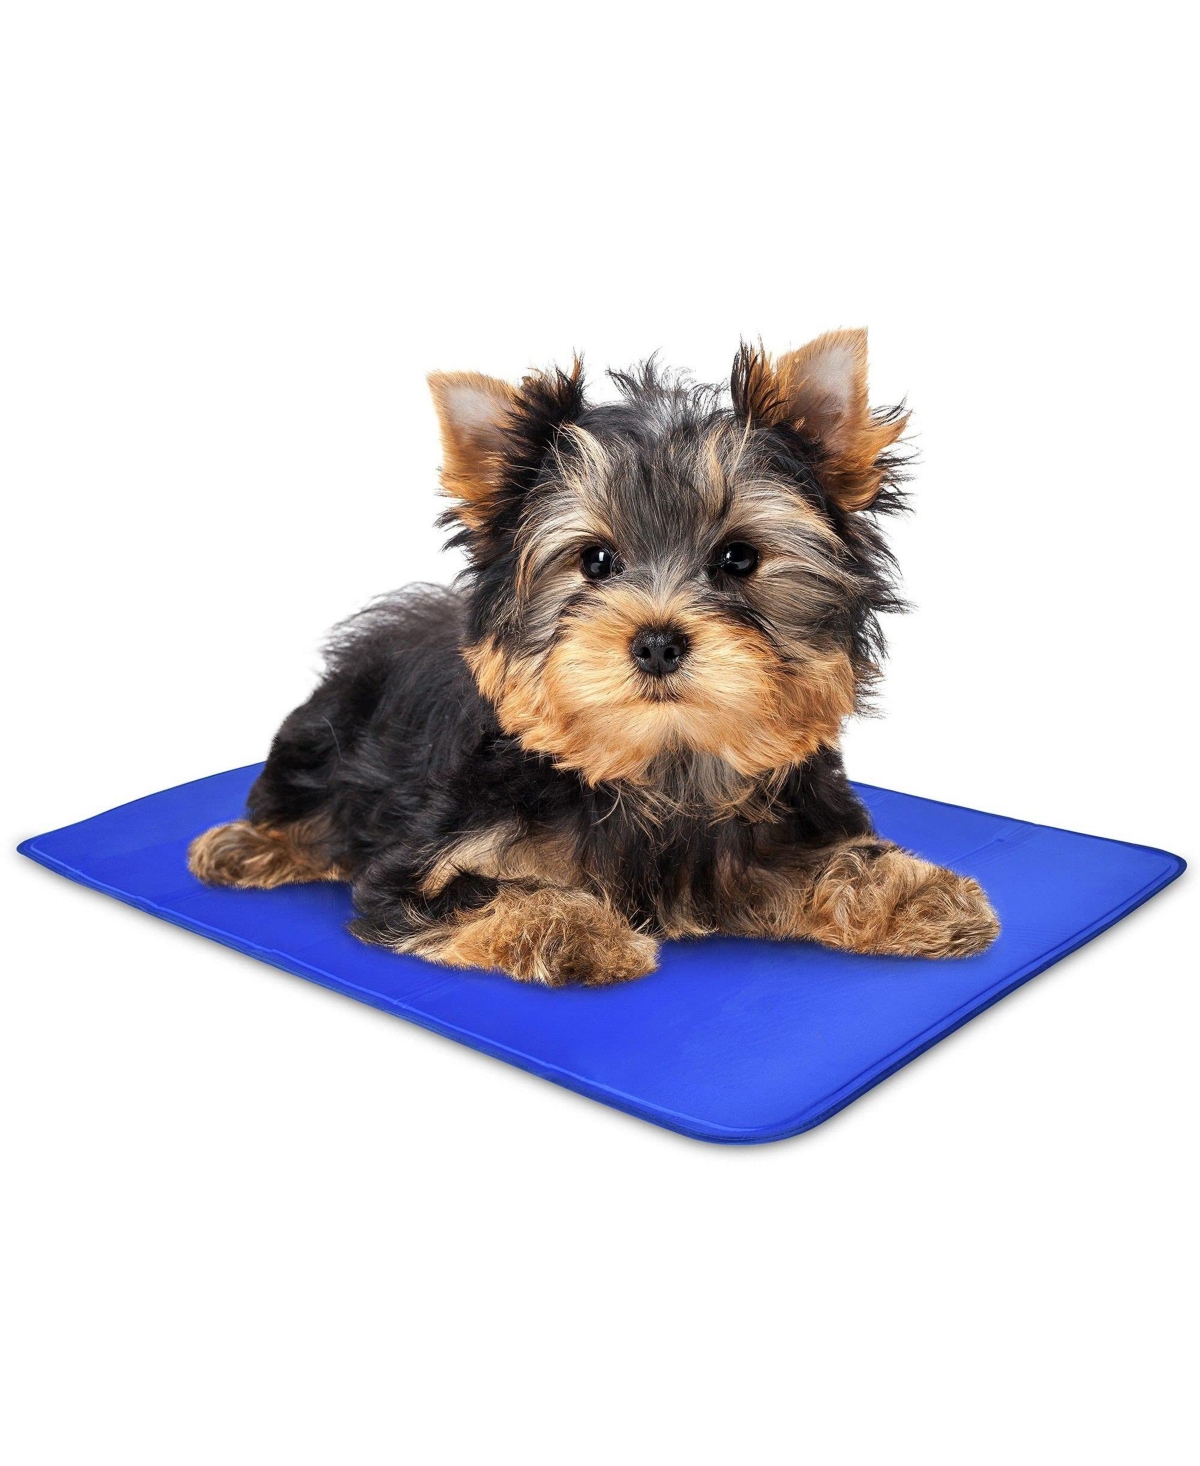 Self Cooling Mat, Gel Based Dog Mat & Pet Bed, X-Small - Blue